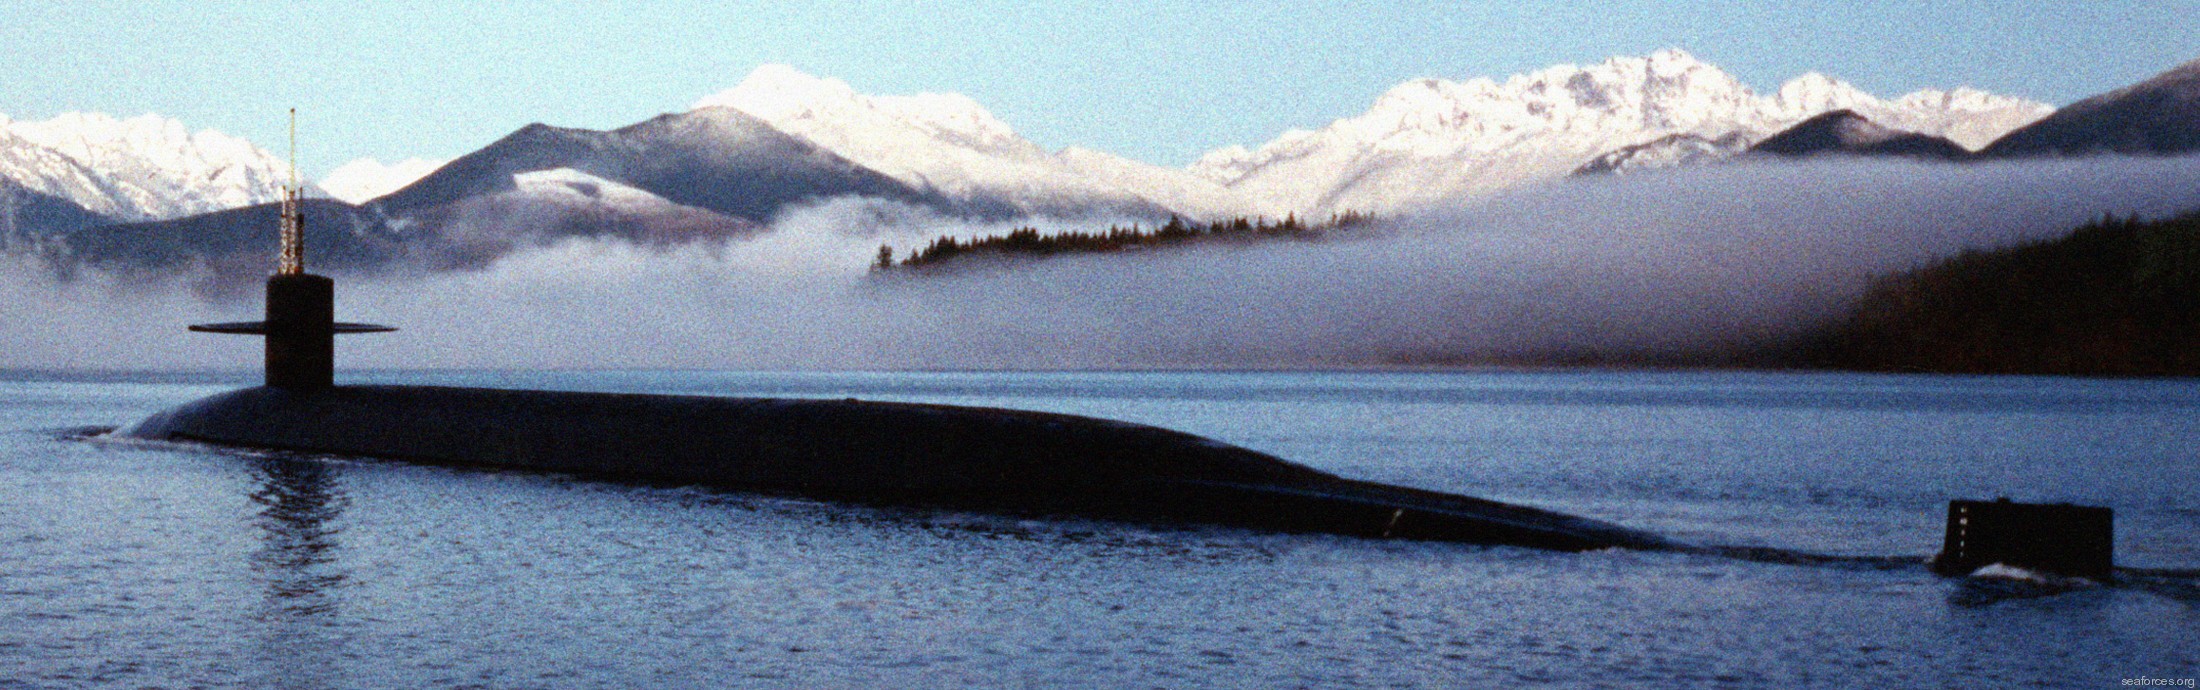 ssbn-729 uss georgia ballistic missile submarine 1997 53 hood canal washington